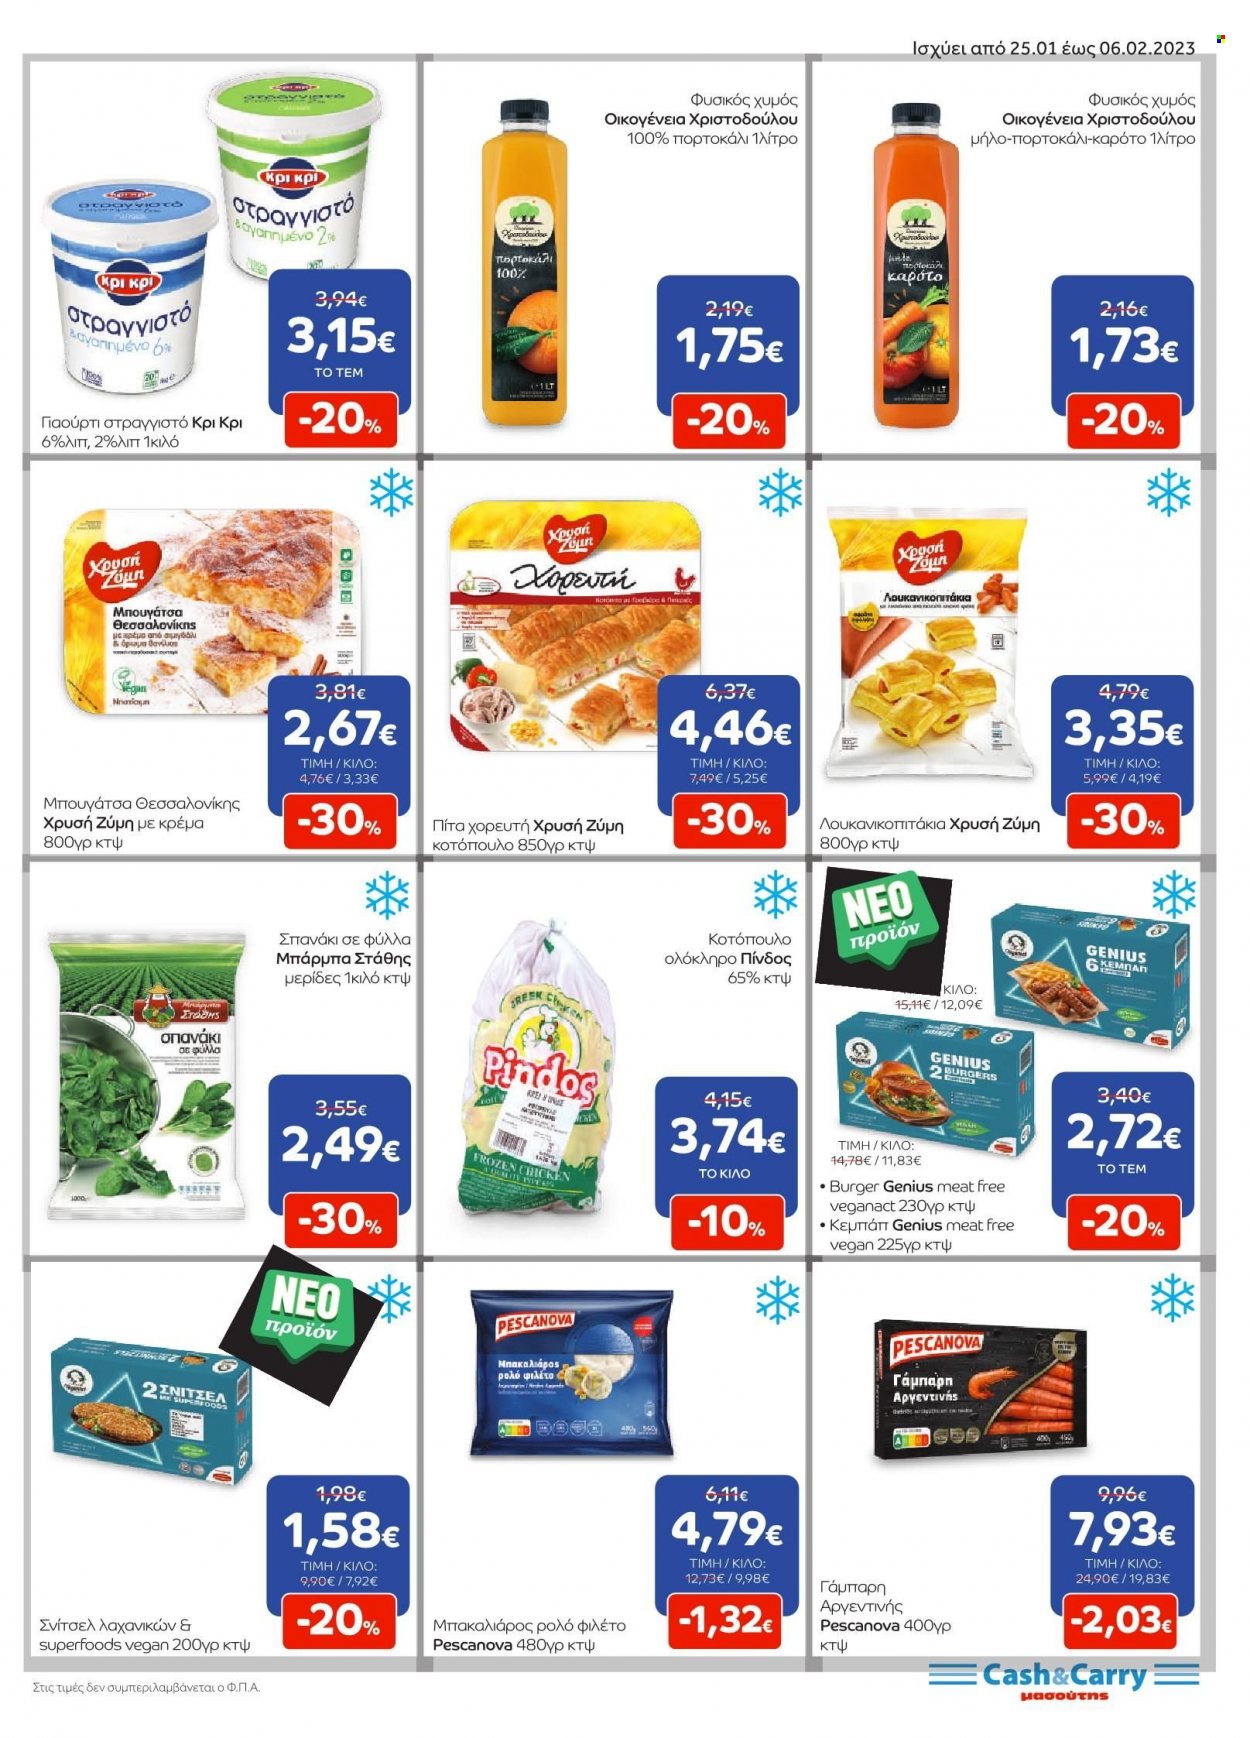 thumbnail - Φυλλάδια Masoutis Cash & Carry - 25.01.2023 - 06.02.2023 - Εκπτωτικά προϊόντα - πίτα, ζύμη, καρότα, σπανάκι, κοτόπουλο, μπακαλιαρος, ρολό, γιαούρτι, Frozen. Σελίδα 7.